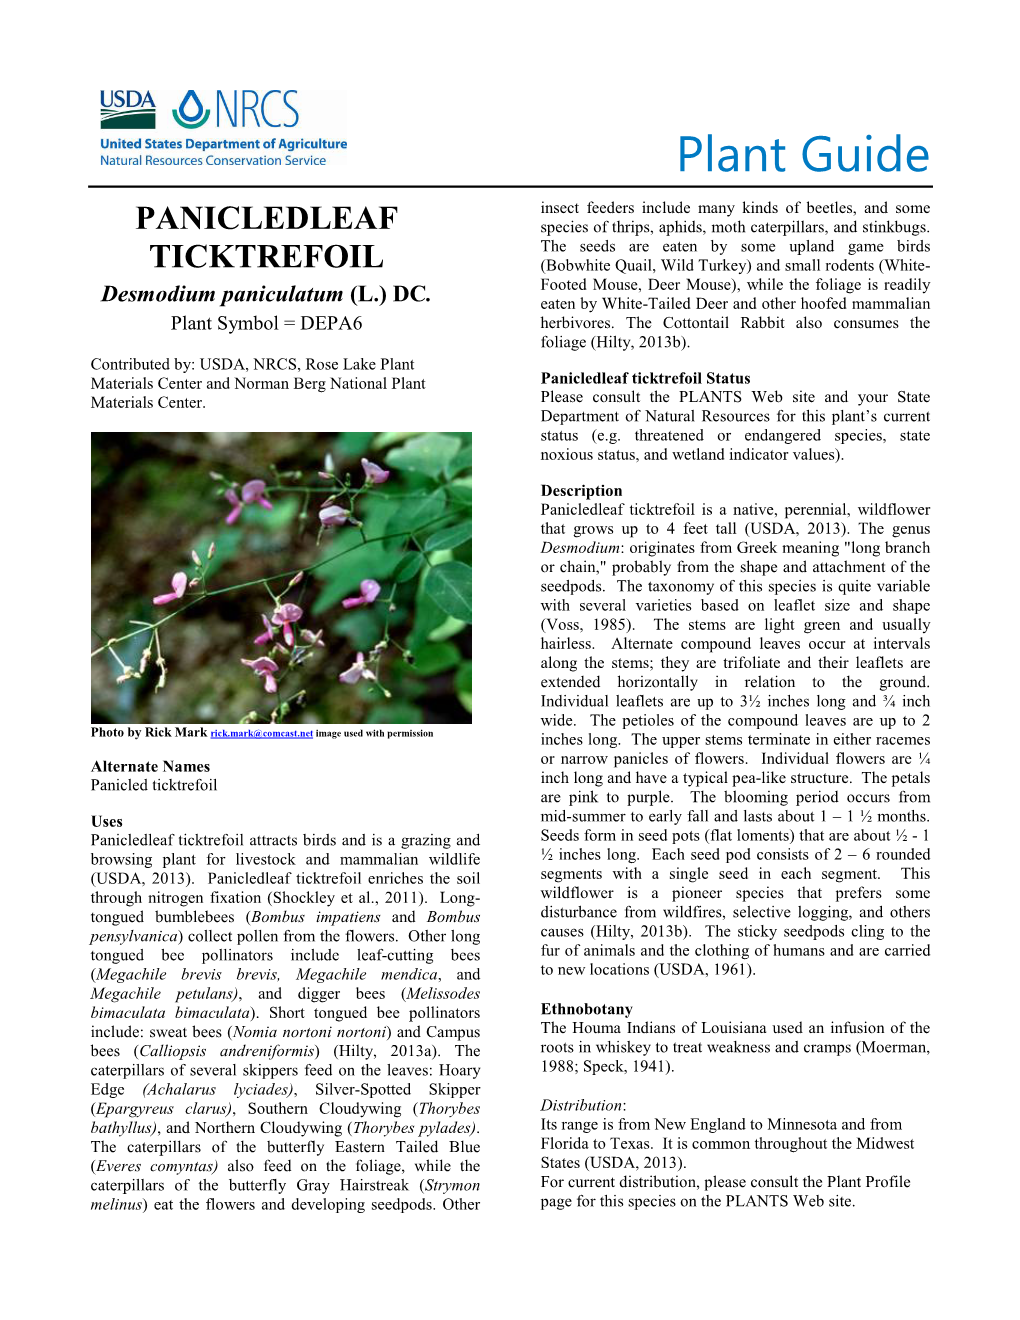 Panicledleaf Ticktrefoil. Desmodium Paniculatum (L.) DC., Plant Guide